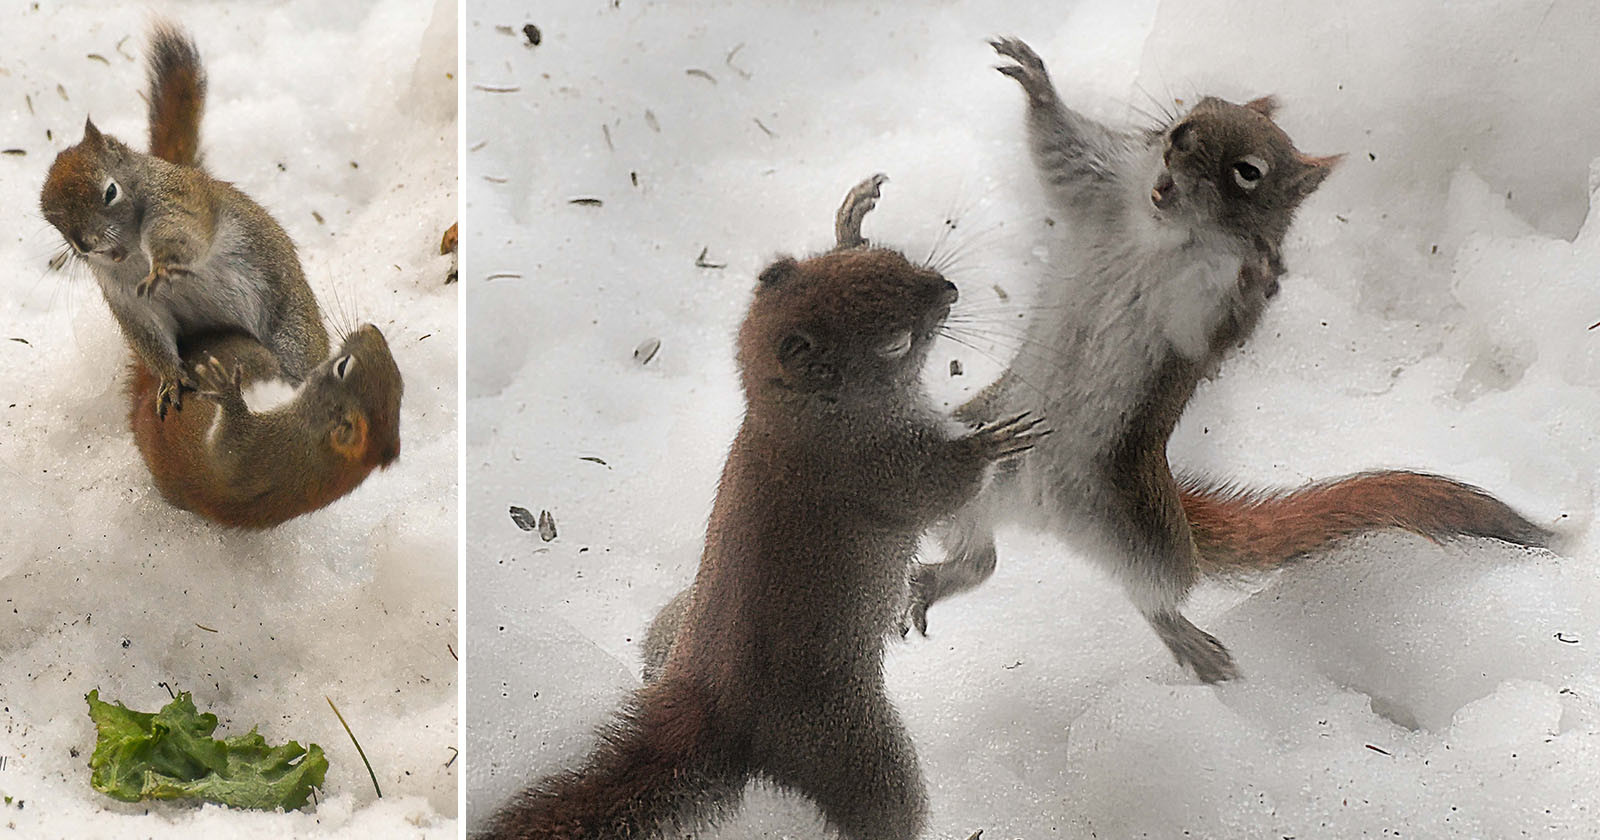  photographer captures squirrels fighting over lettuce 